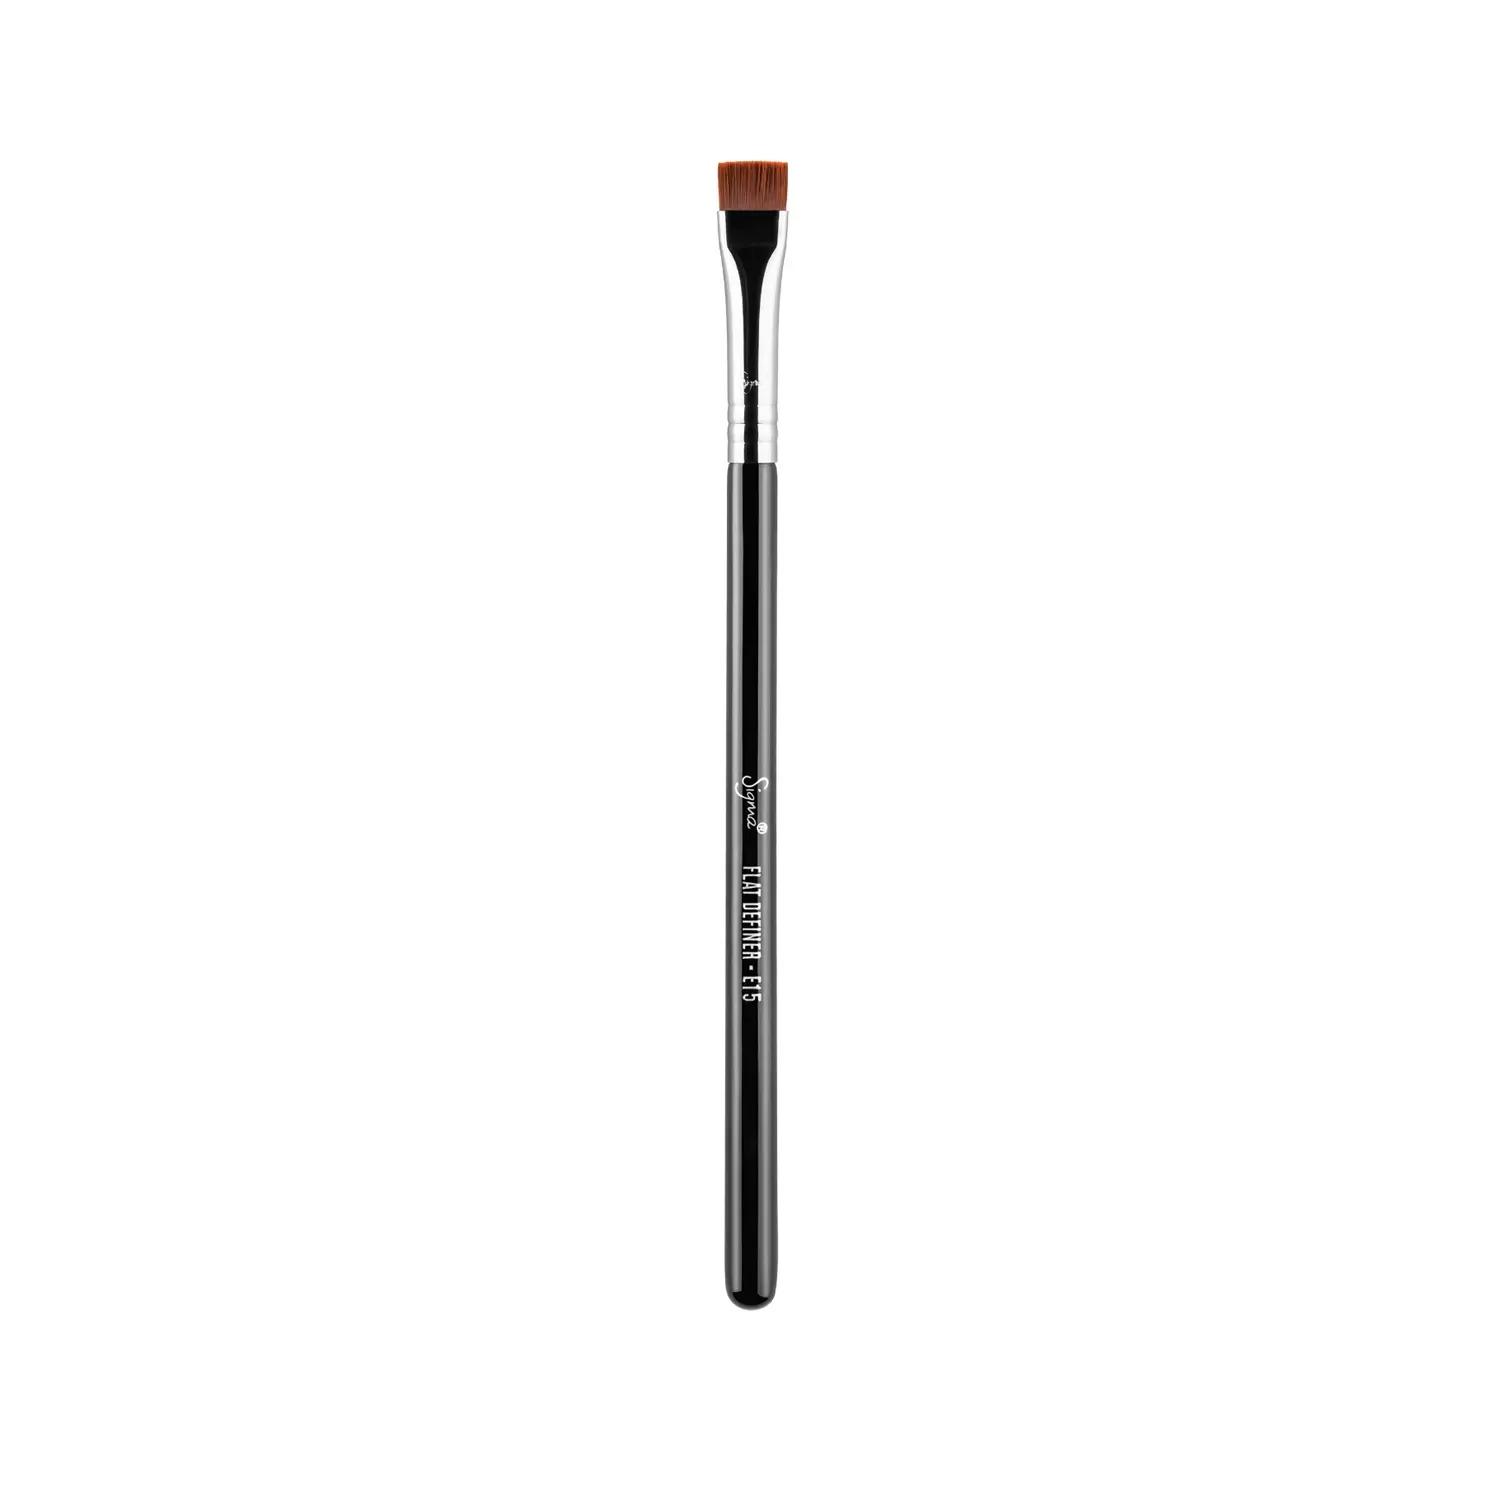 sigma beauty e15 flat definer brush - black/chrome